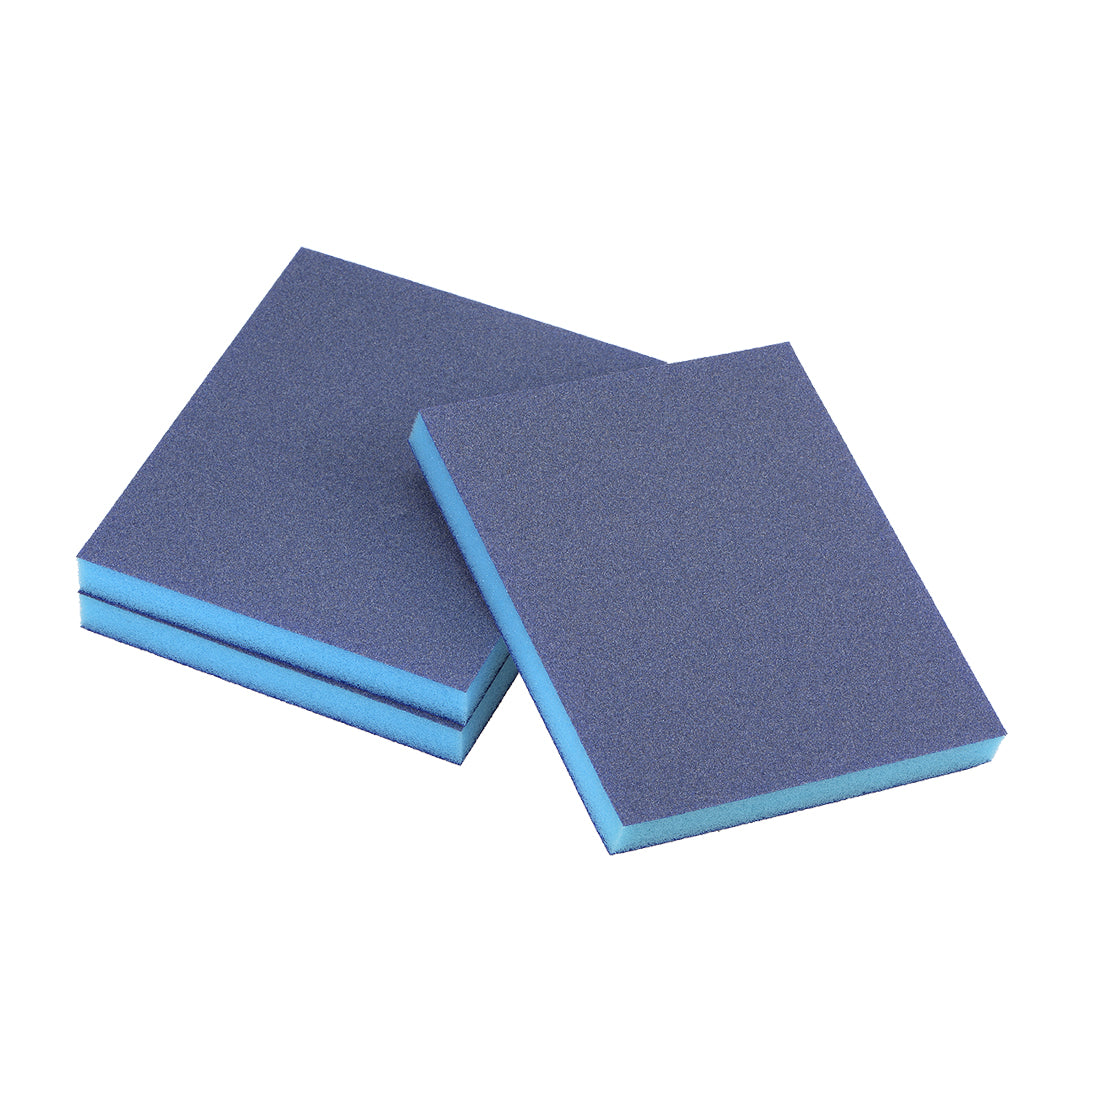 uxcell Uxcell Sanding Sponge 180 Grit Sanding Block Pad 4.7inch x 3.9inch x 0.4inch Blue 3pcs